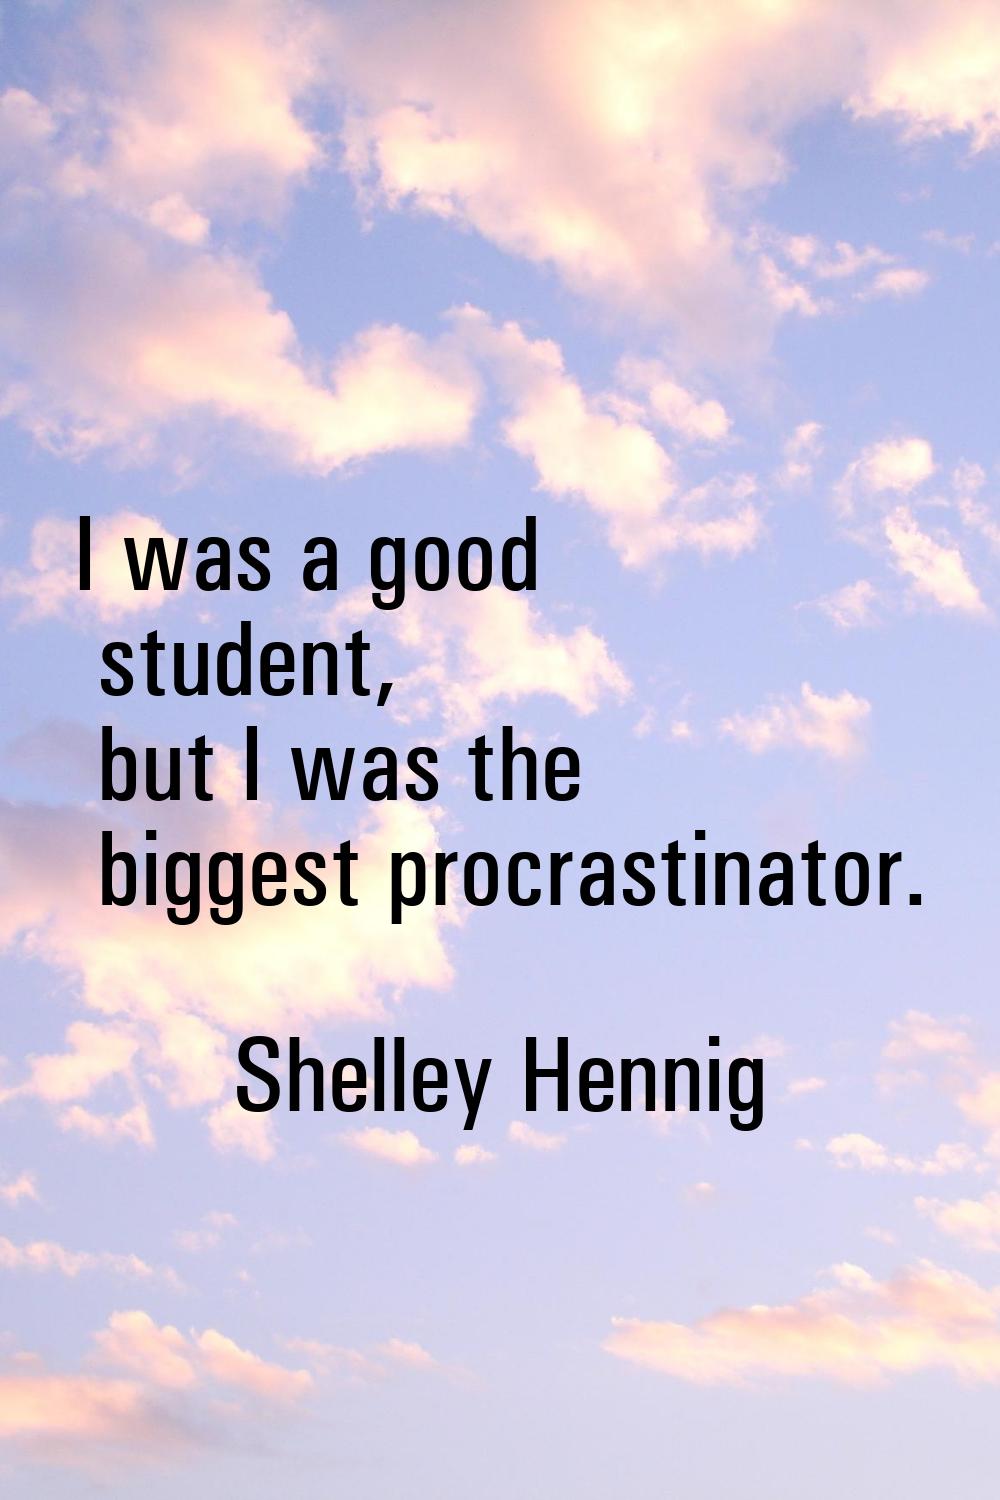 I was a good student, but I was the biggest procrastinator.